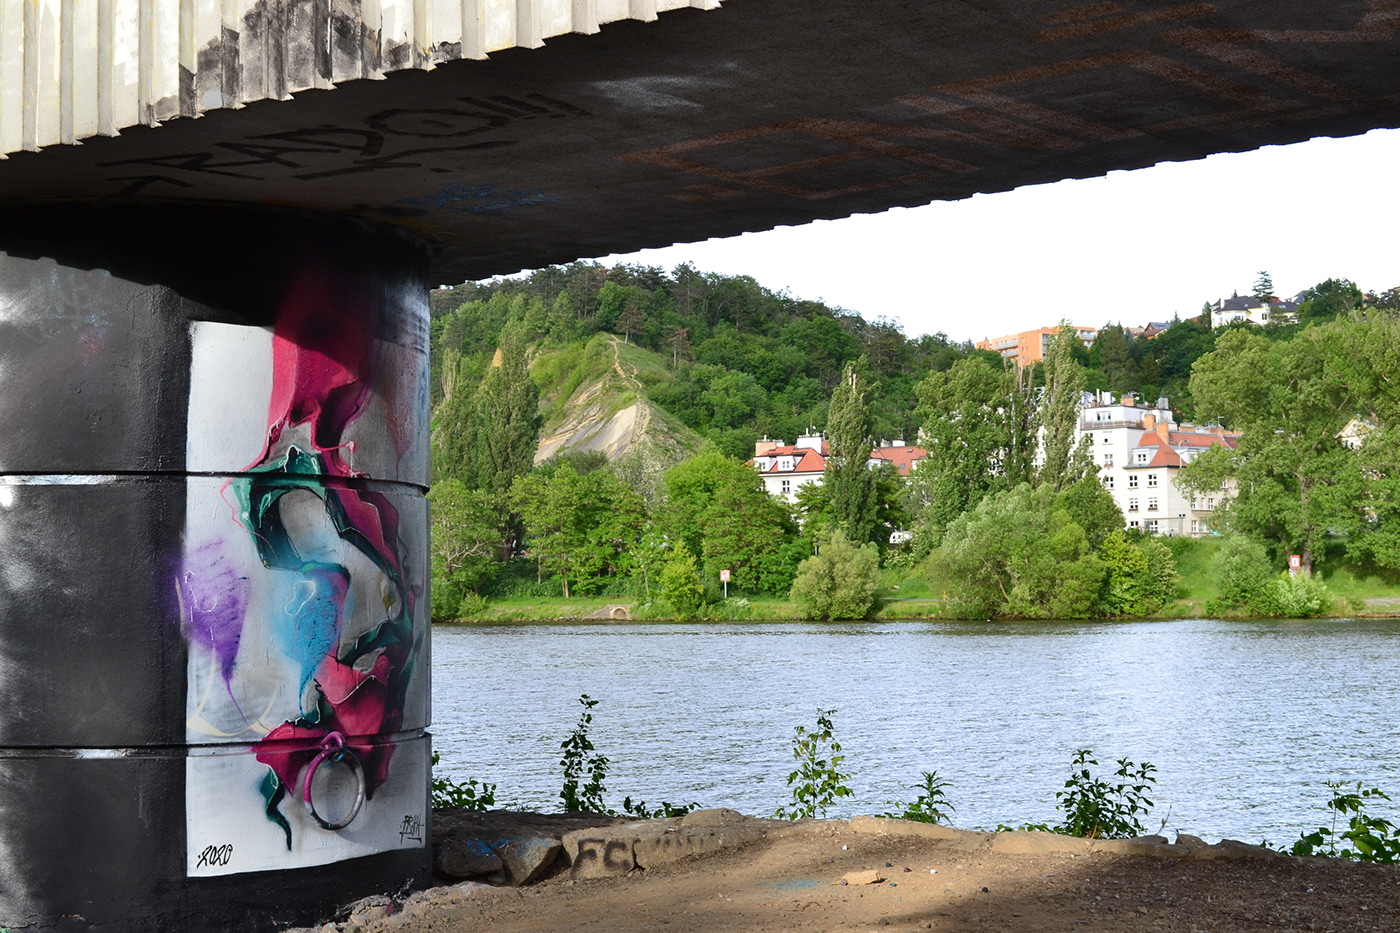 Graffiti Czech spray art walls Street urban art aerosol writing  legal